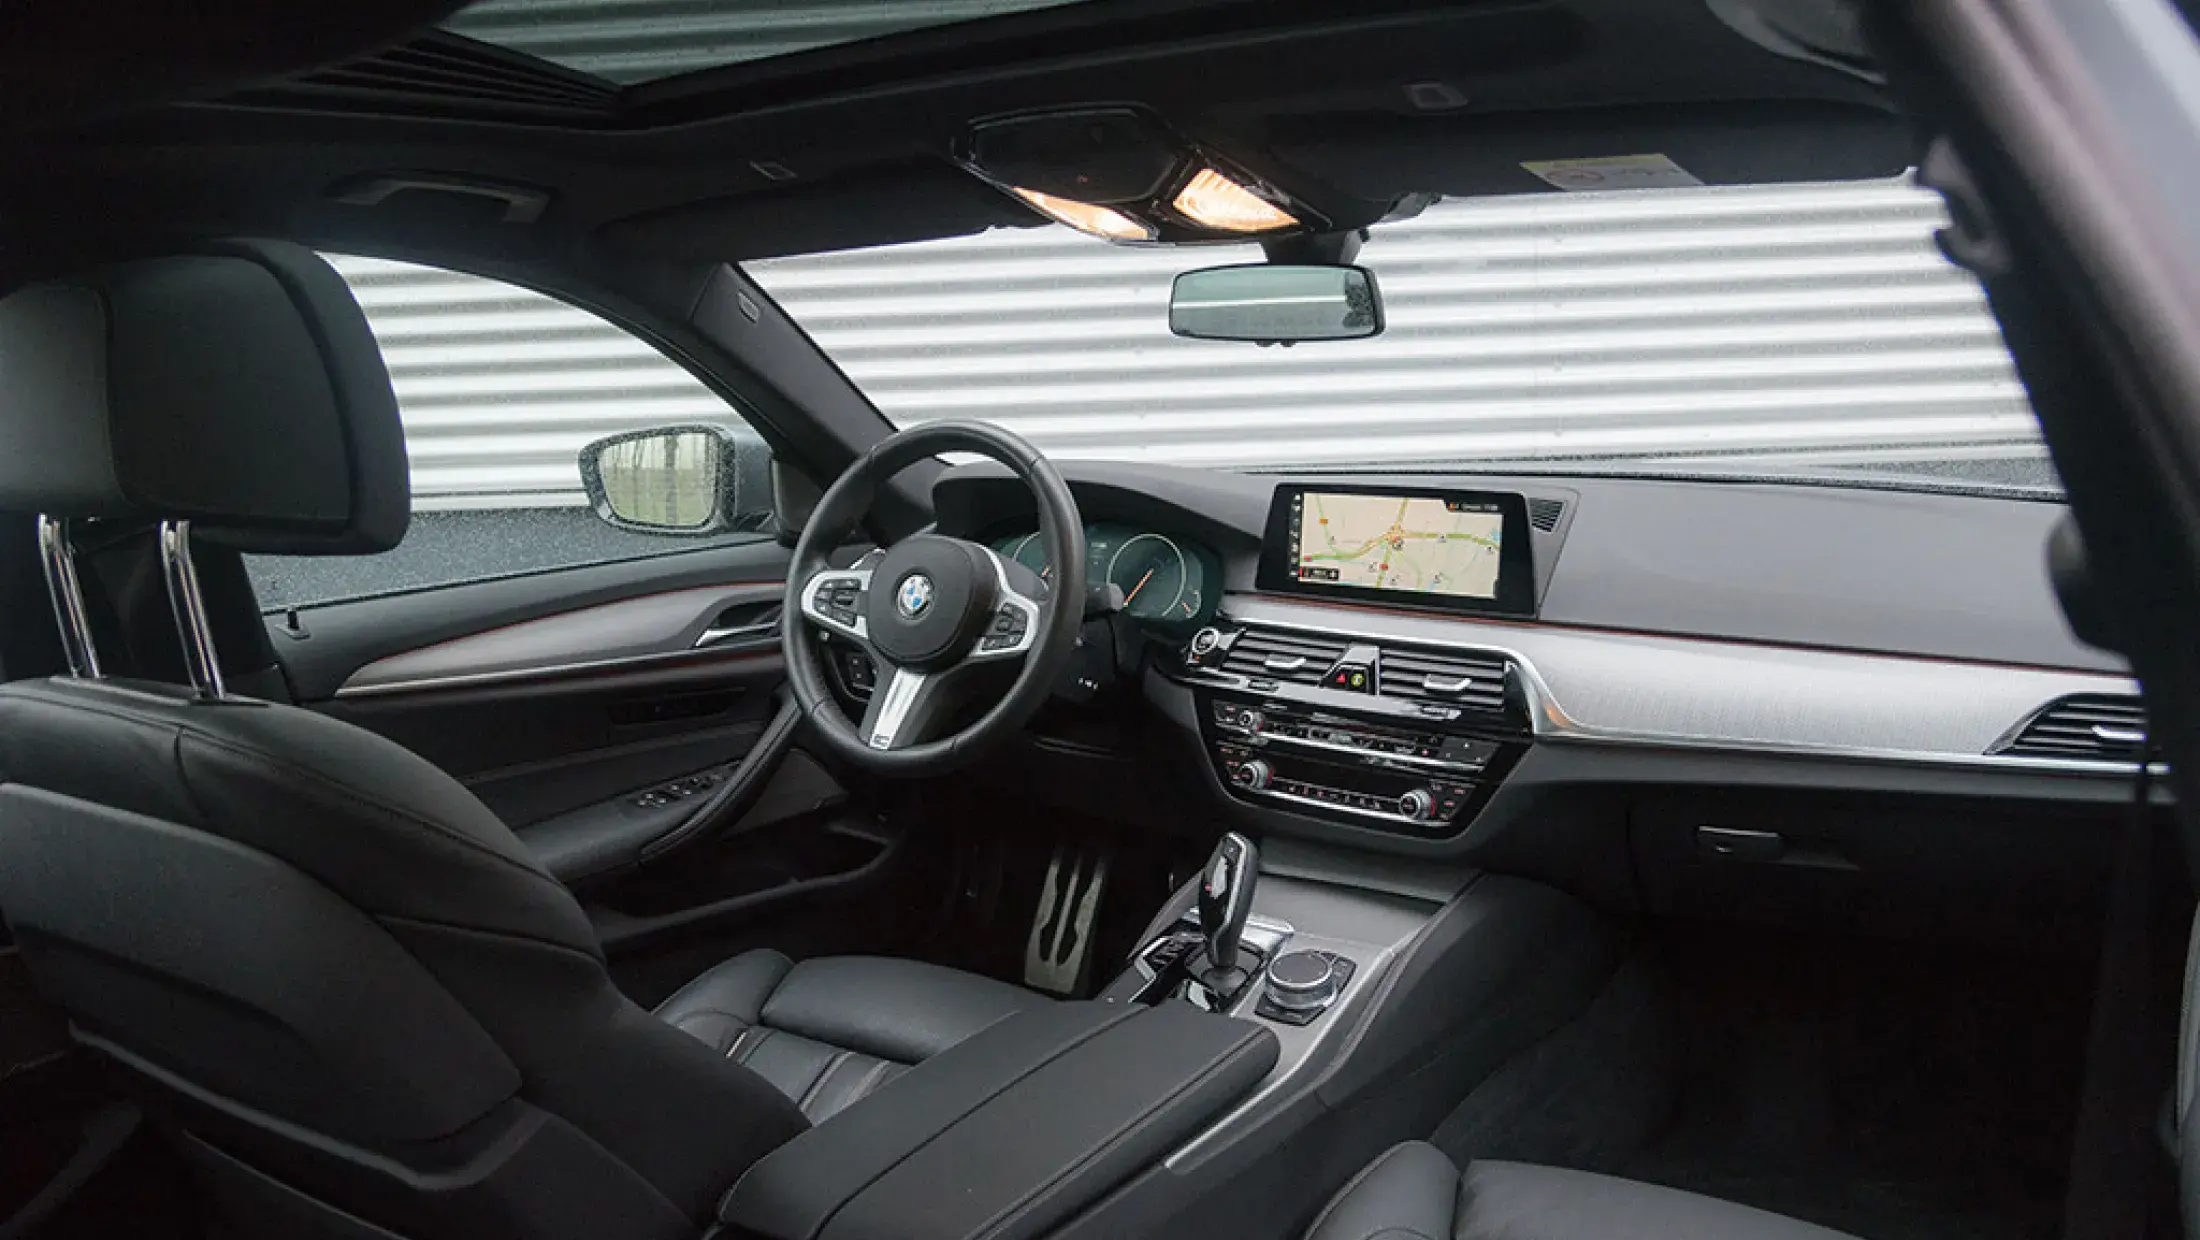 BMW 540i xDrive High Executive M-Sport Bluestone Metallic G30 Bergwerff